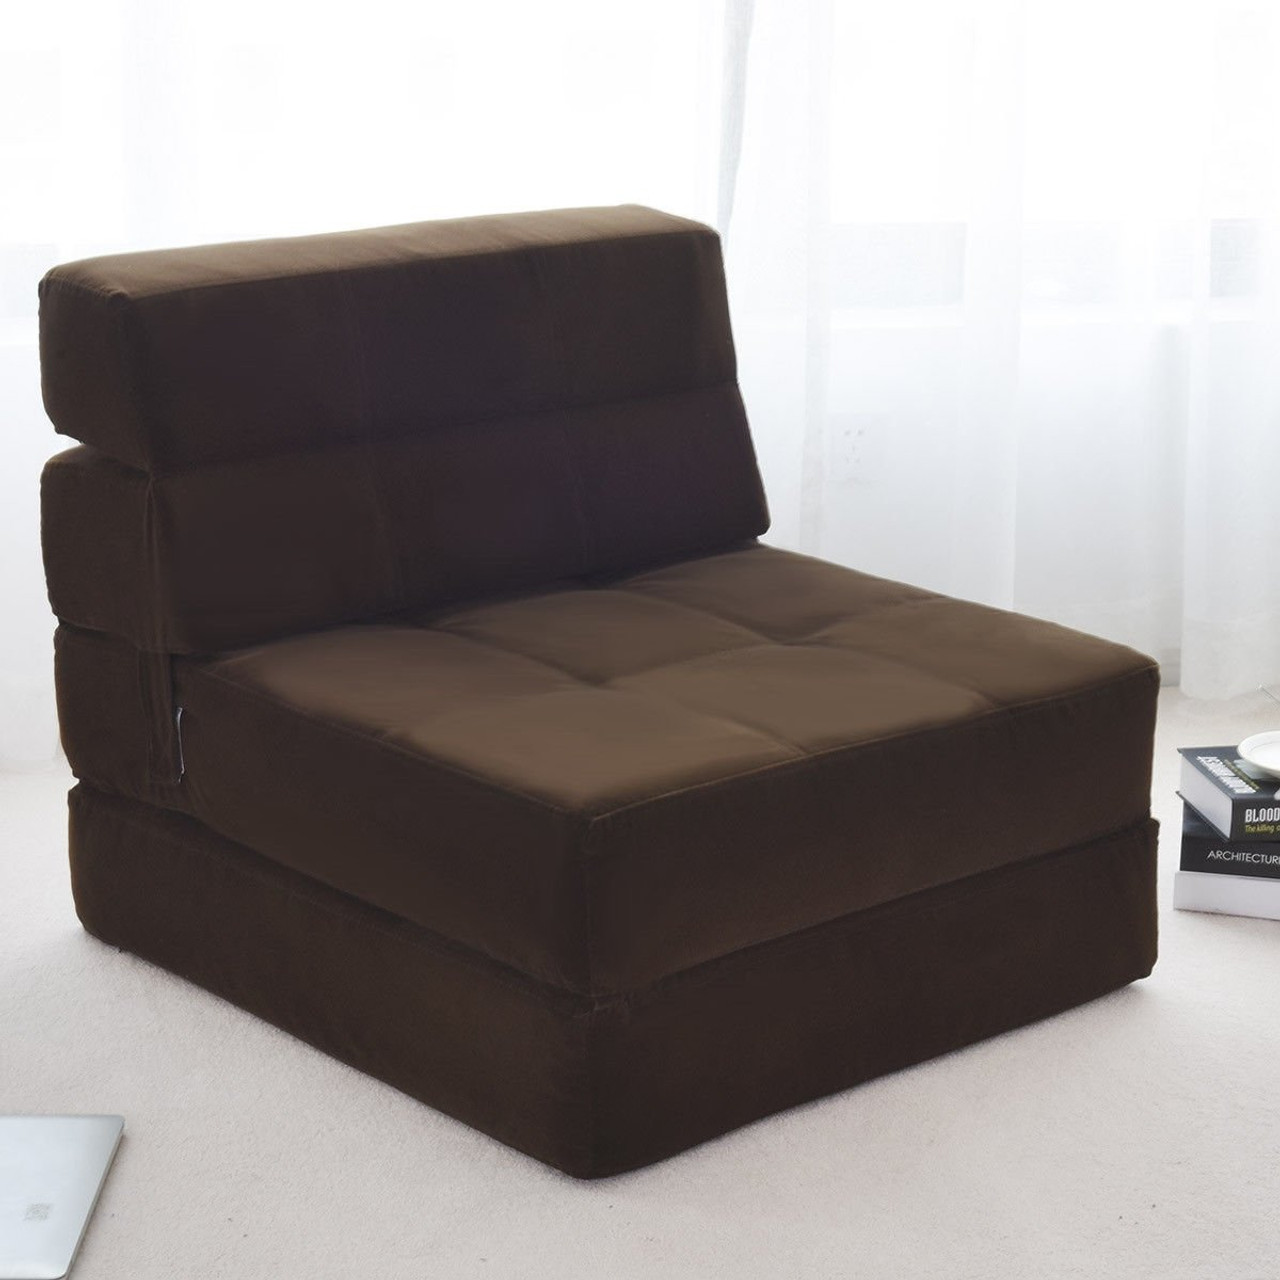 Tri Fold Folding Chair Convertible Sleeper Bed Hw58039cf By Cw